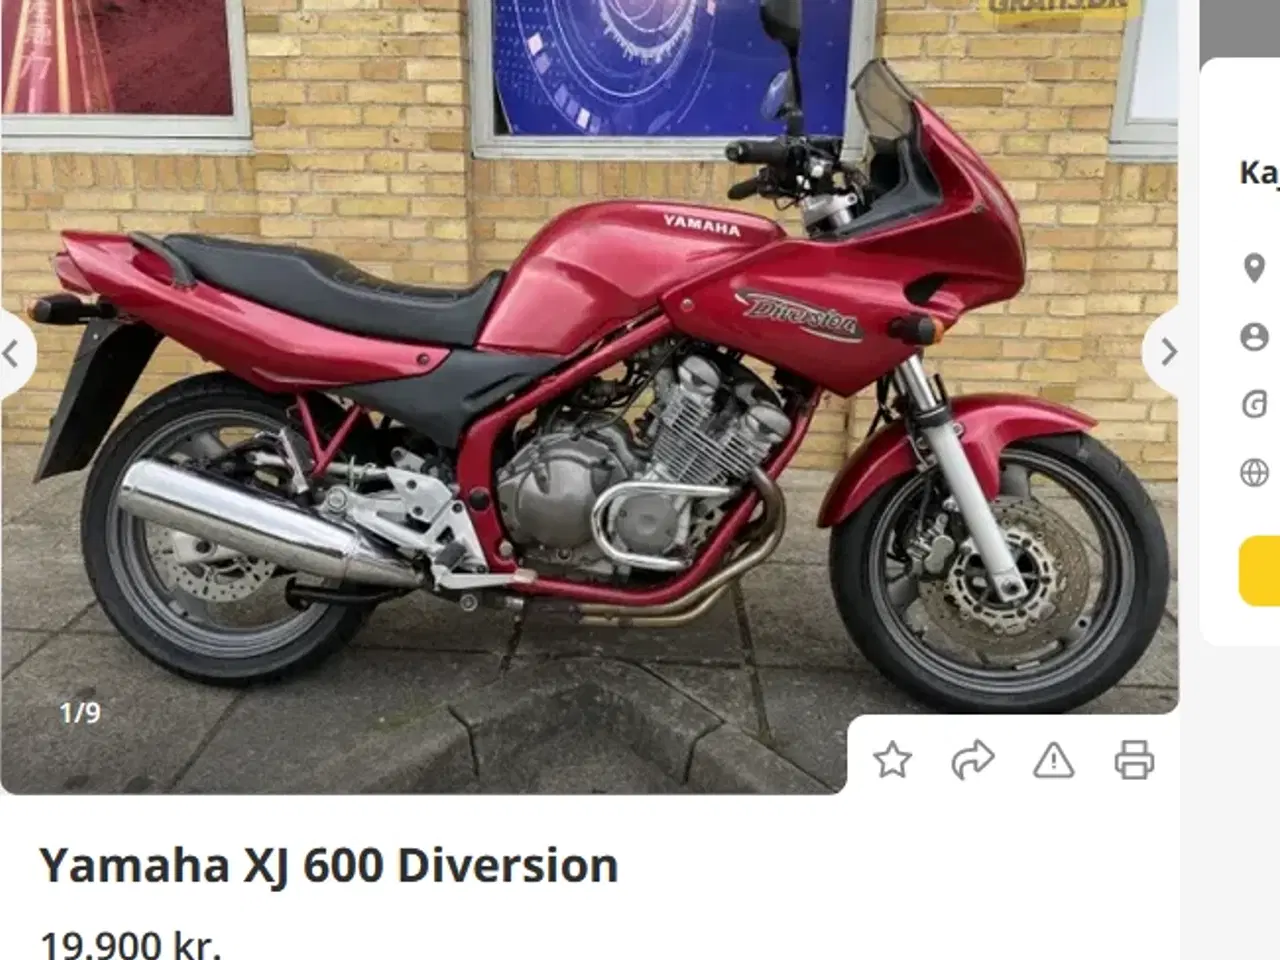 Billede 14 - Billig men velholdt Yamaha XJ600